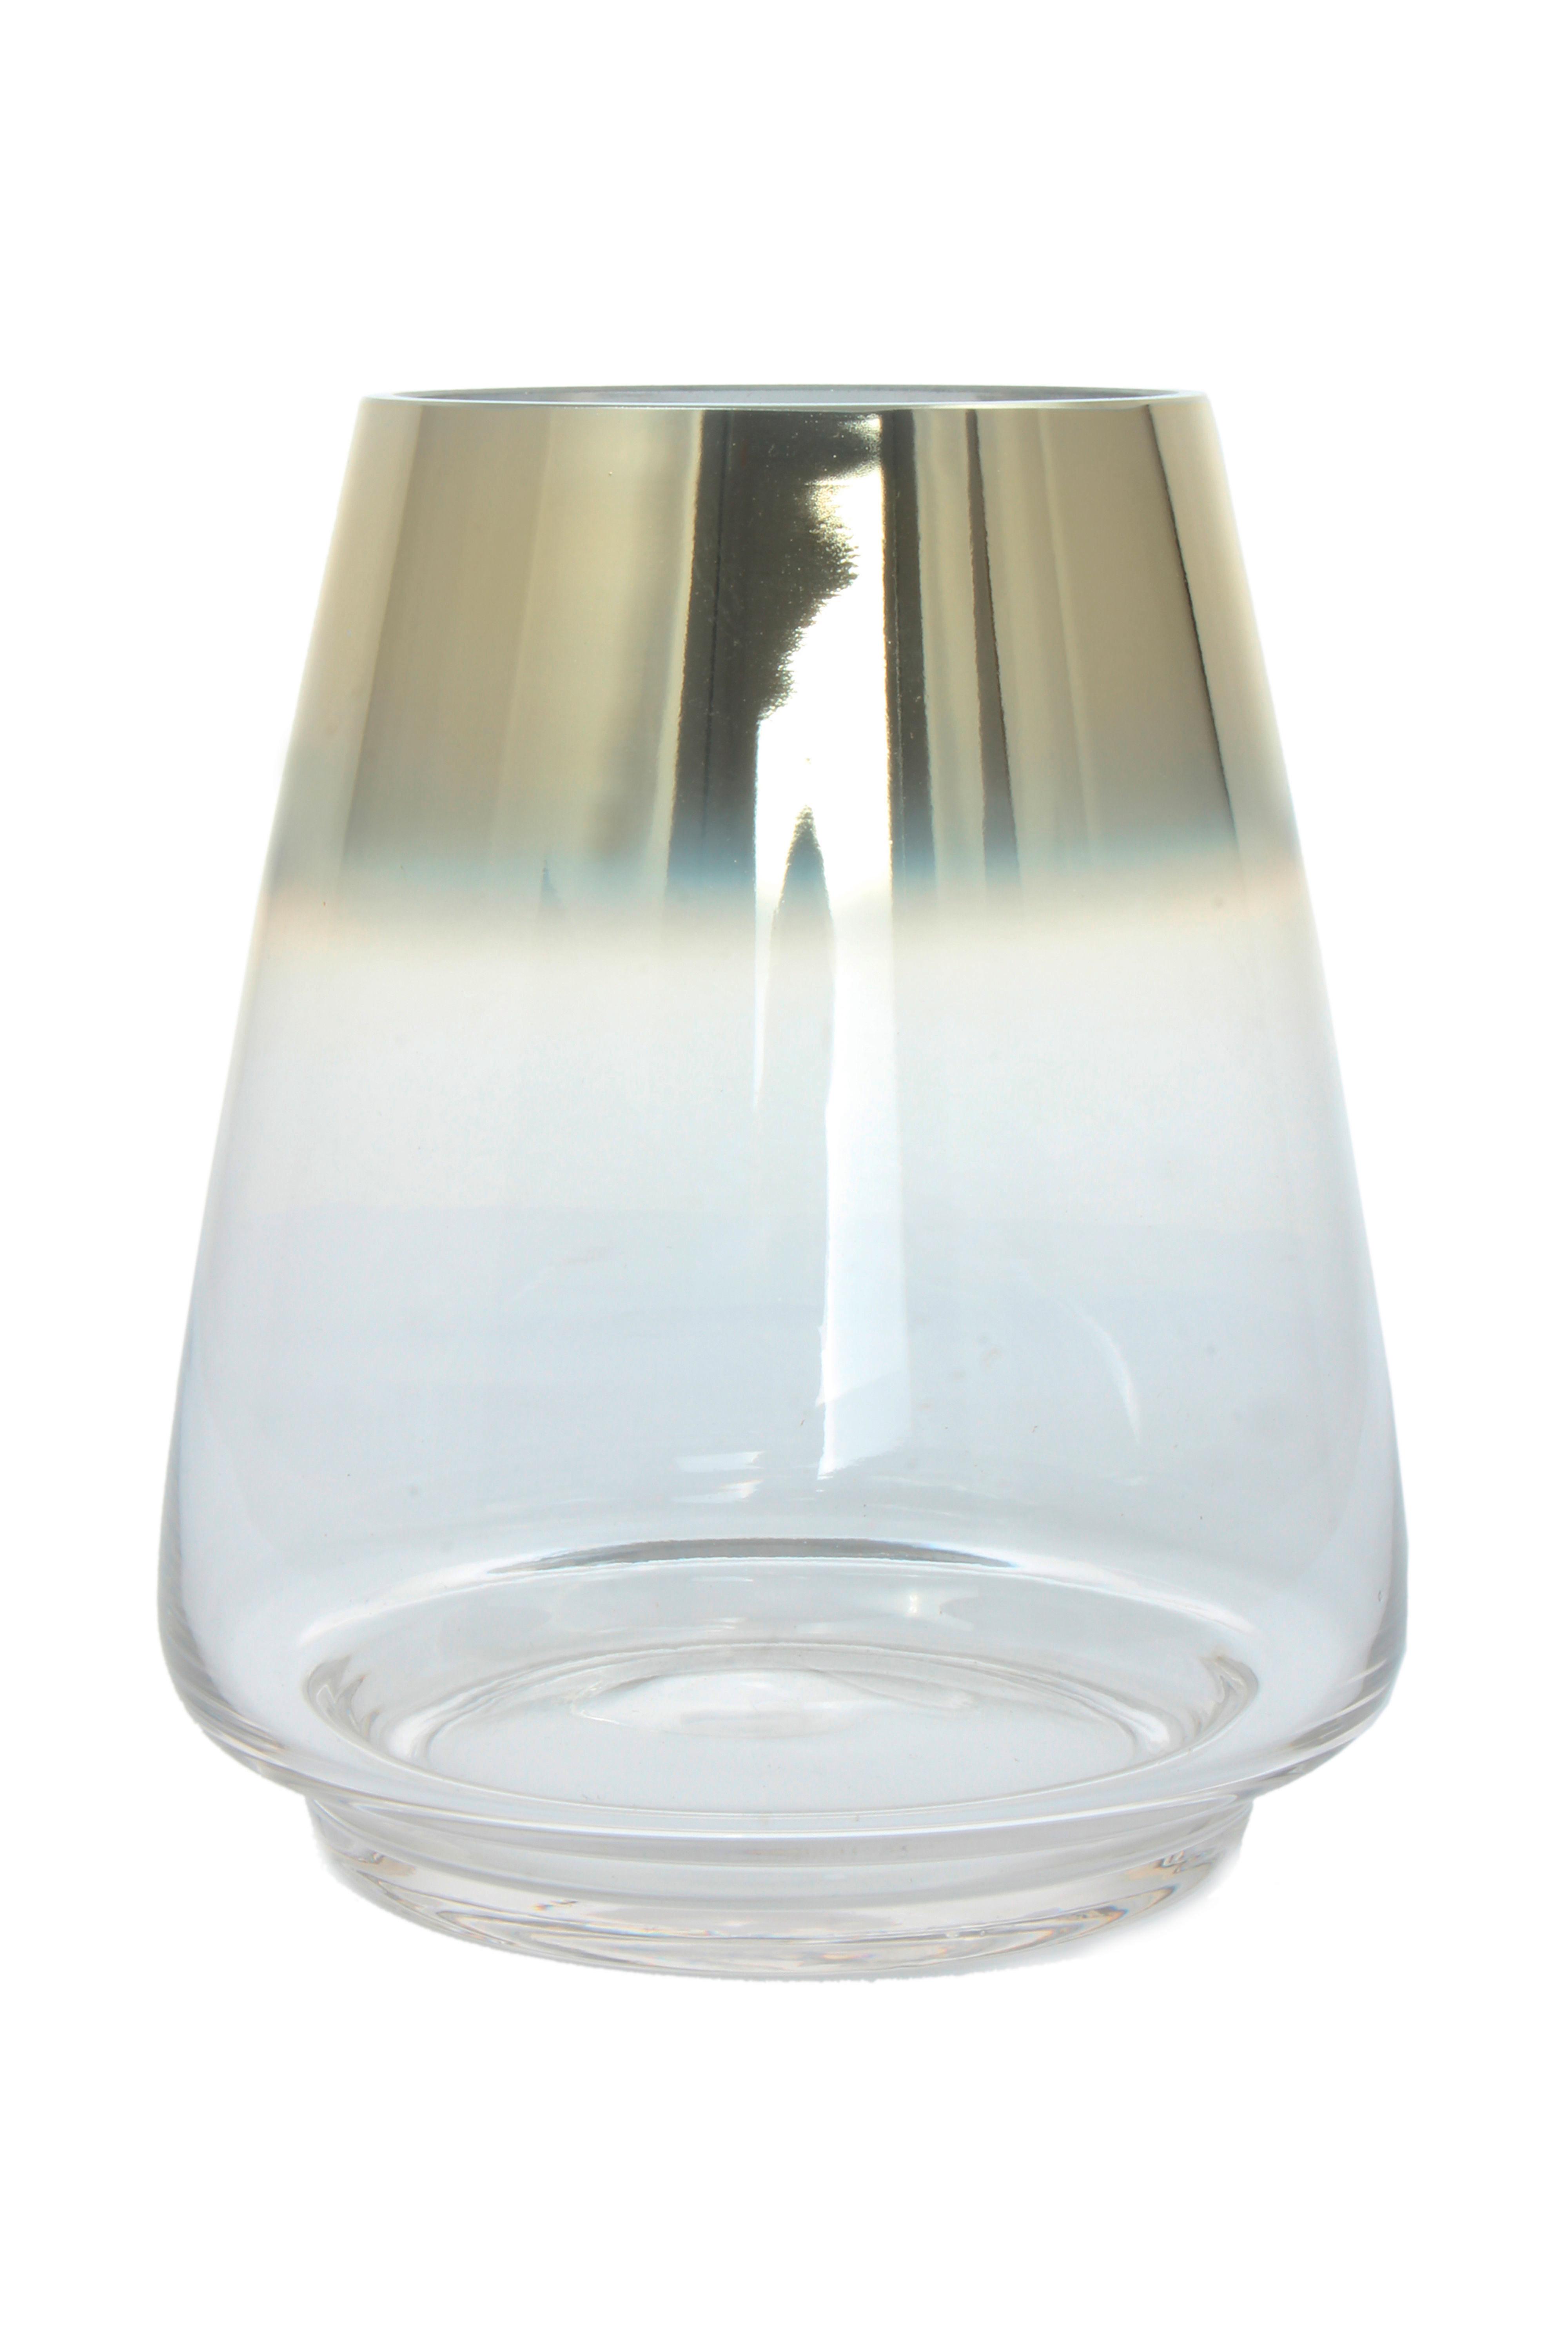 Vase Saigon Bauchig Glas Goldfarben H: 18,5 cm - Goldfarben, Design, Glas (16/18,5/16cm)